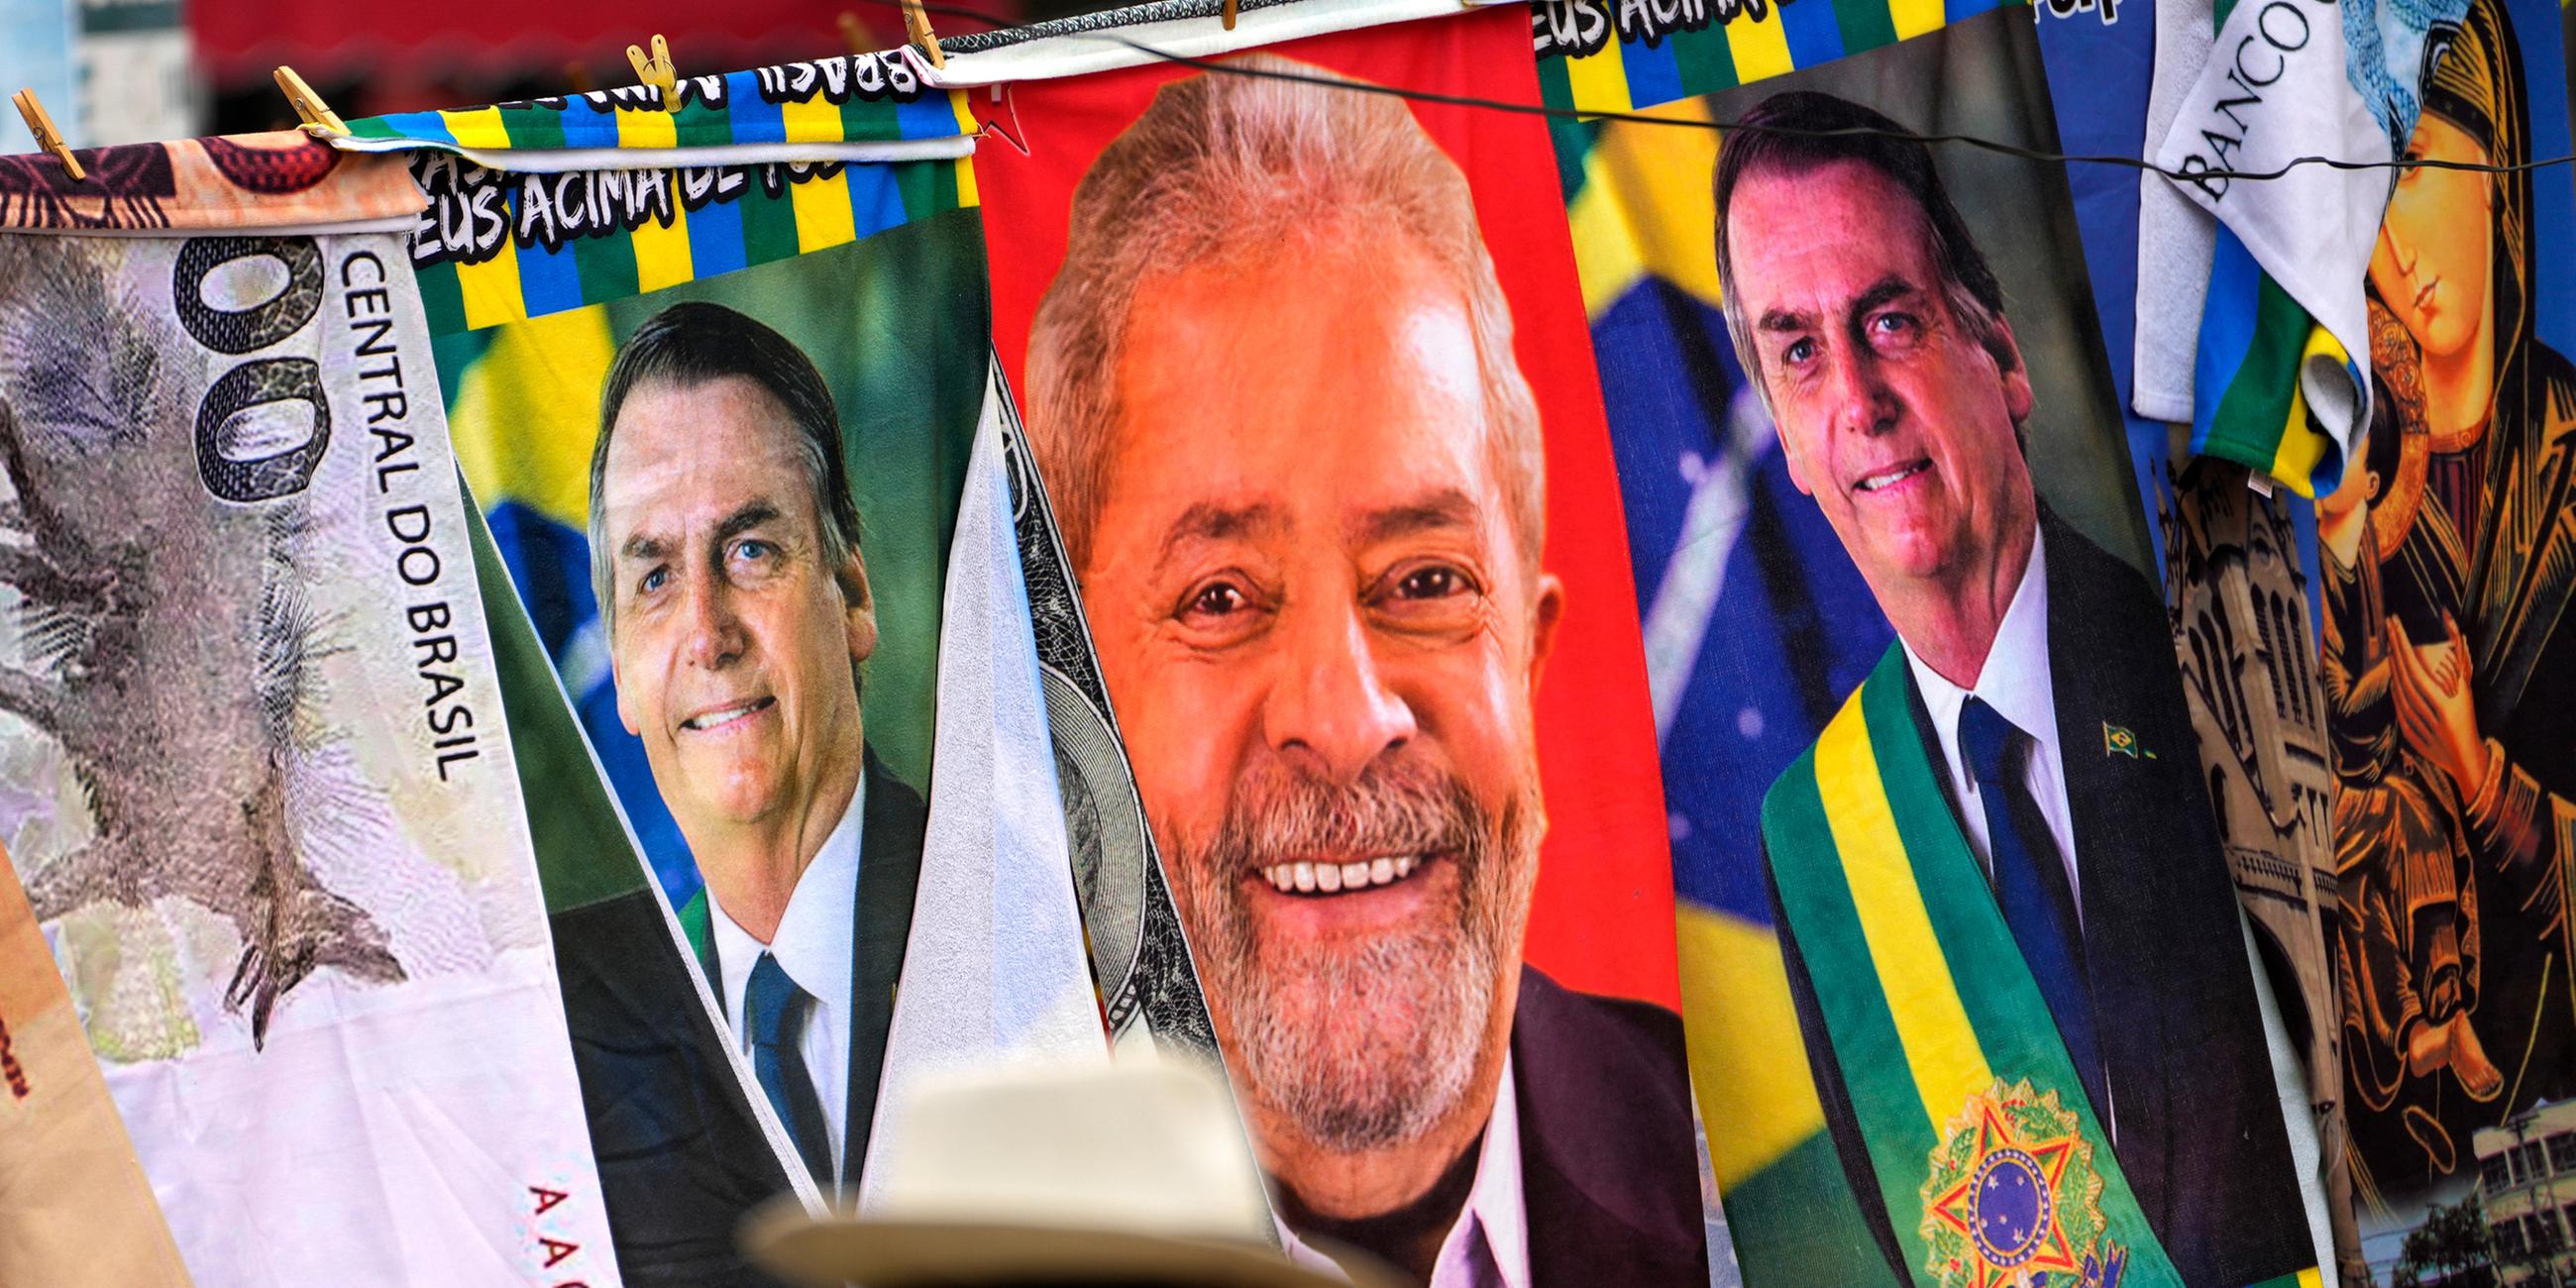 Jair Bolsonaro und Luiz Inacio Lula da Silva